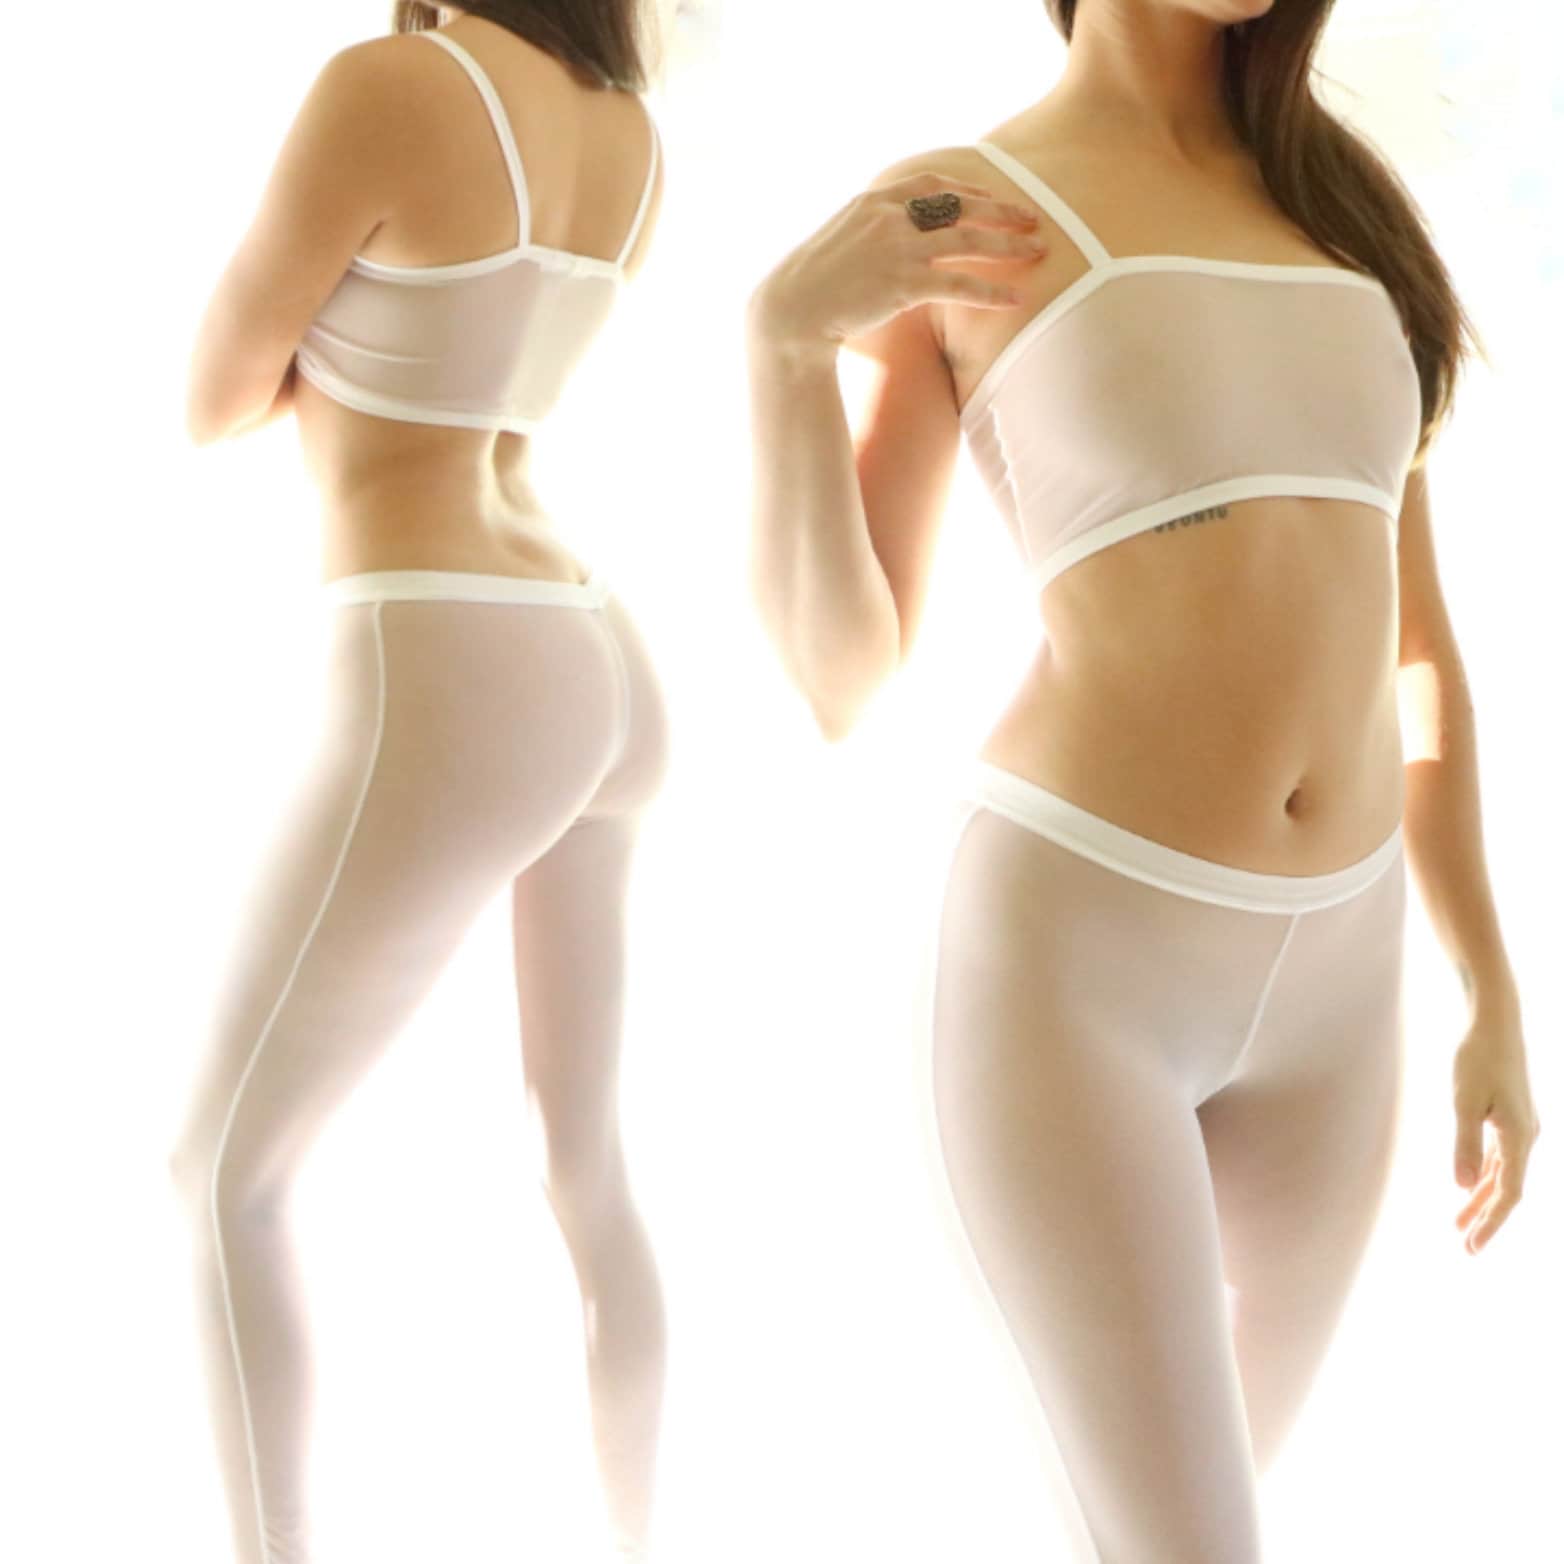 Sheer Yoga Pants, Lingerie Bralette Set, See Through Comfy Pants